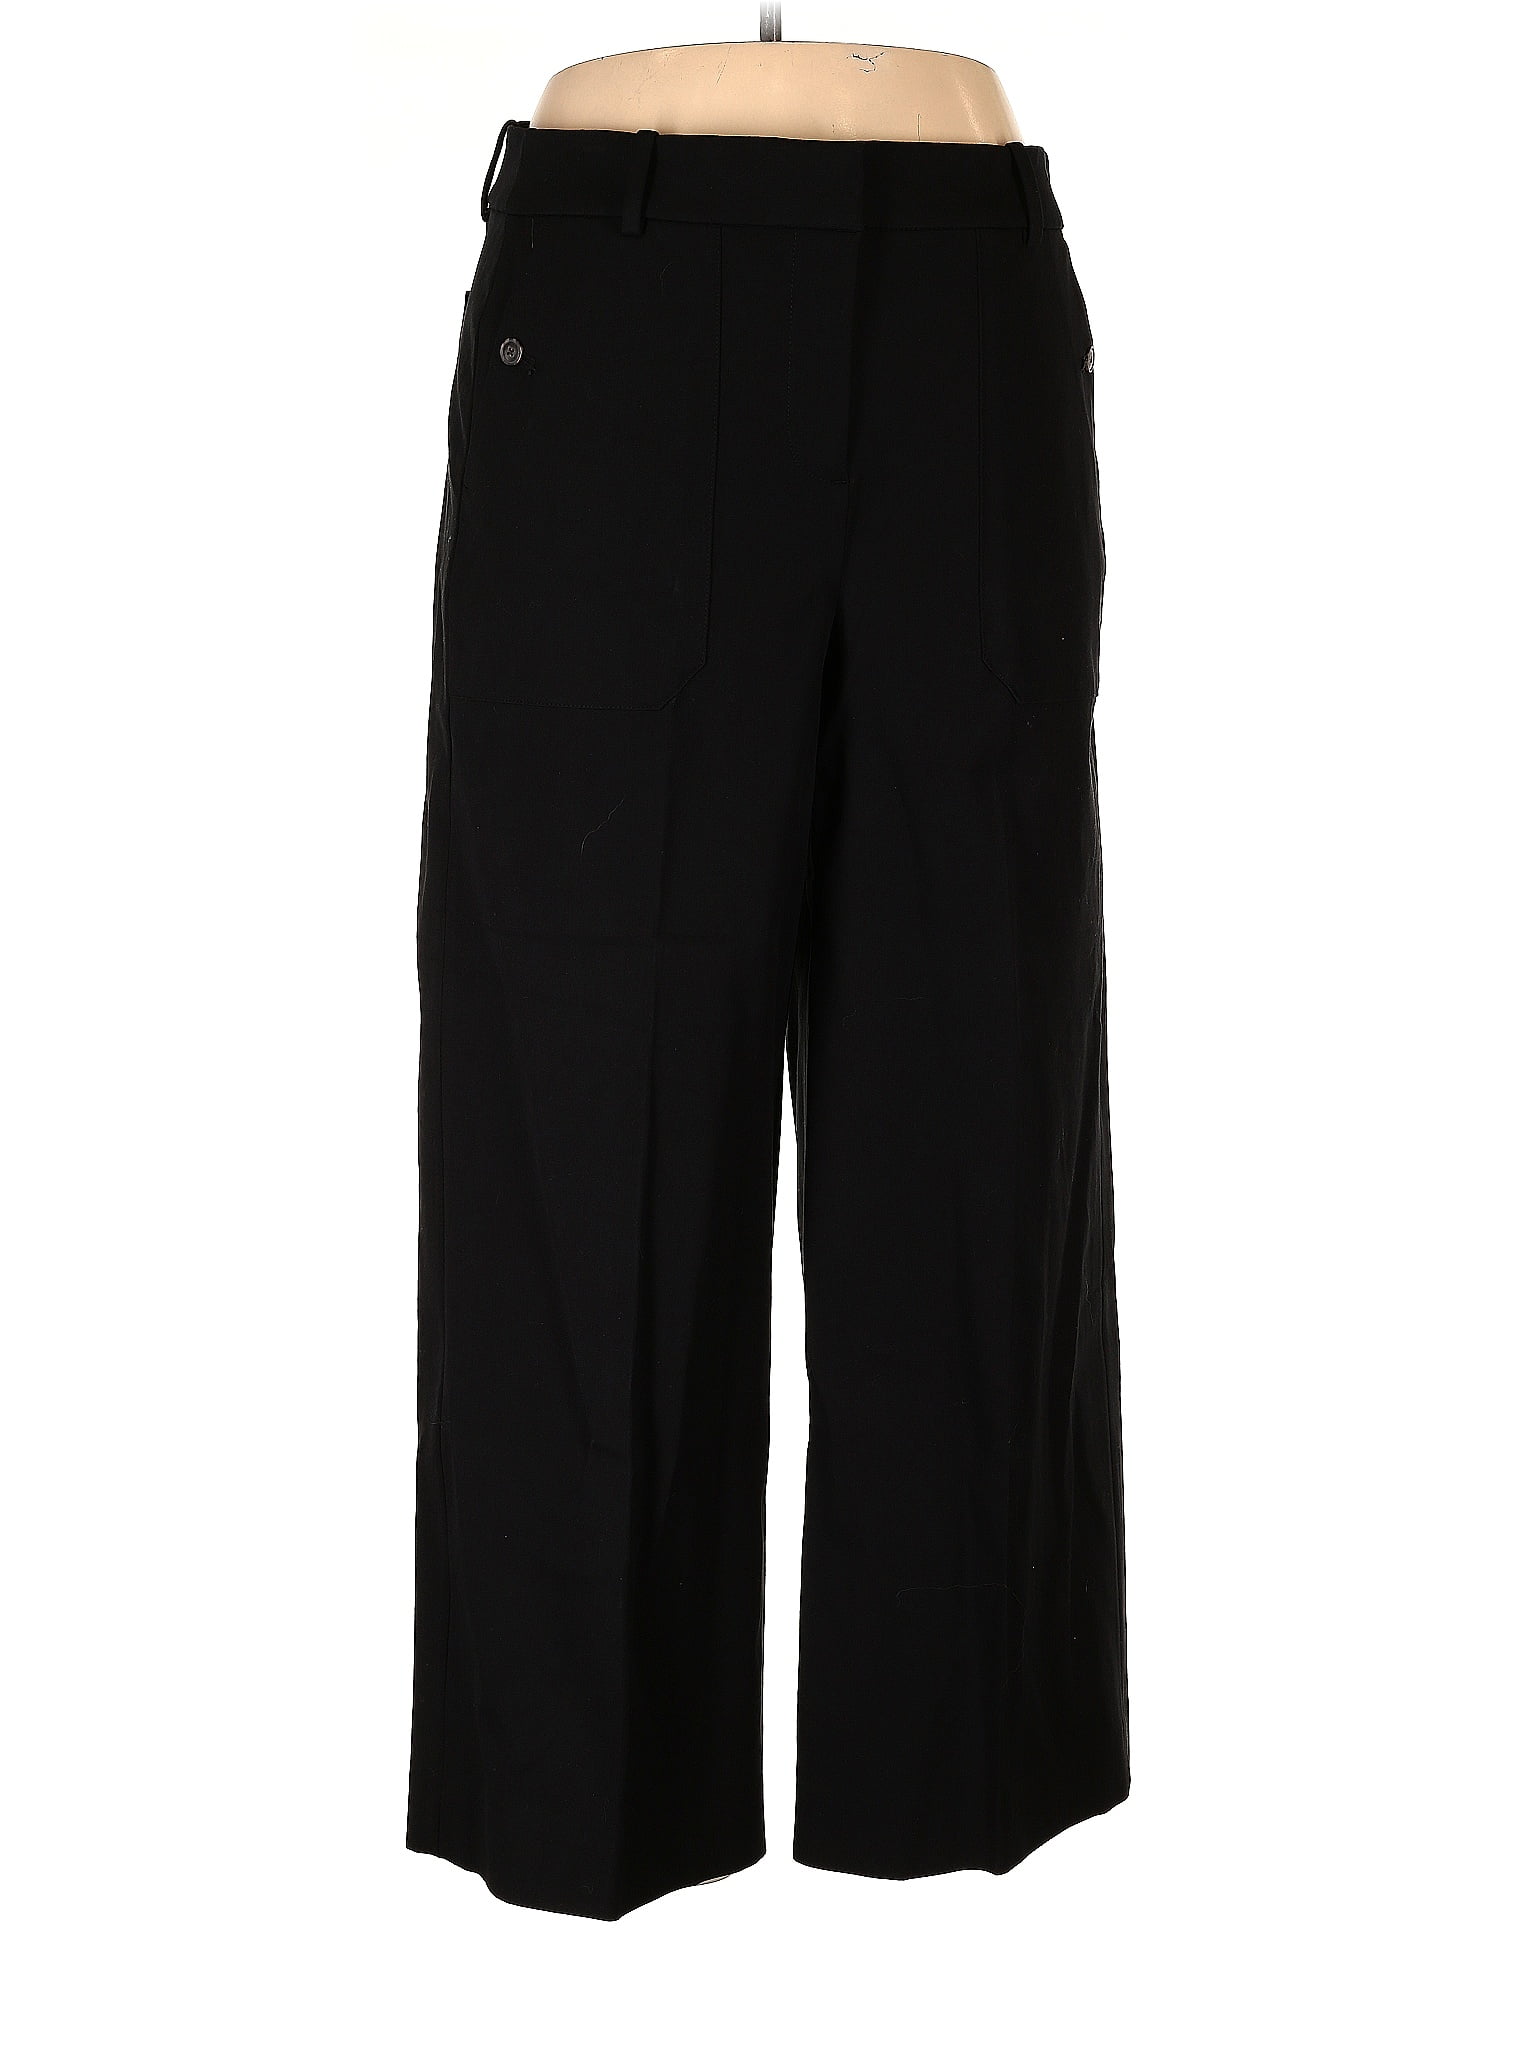 J.Crew Black Dress Pants Size 14 - 72% off | thredUP